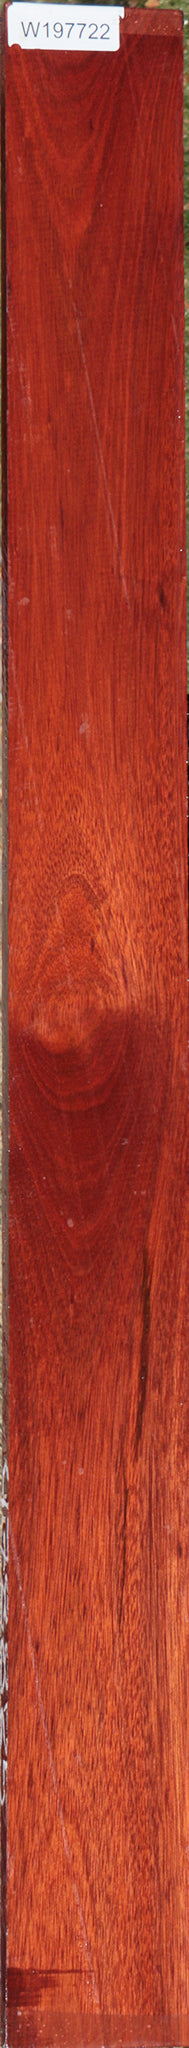 Bloodwood Lumber